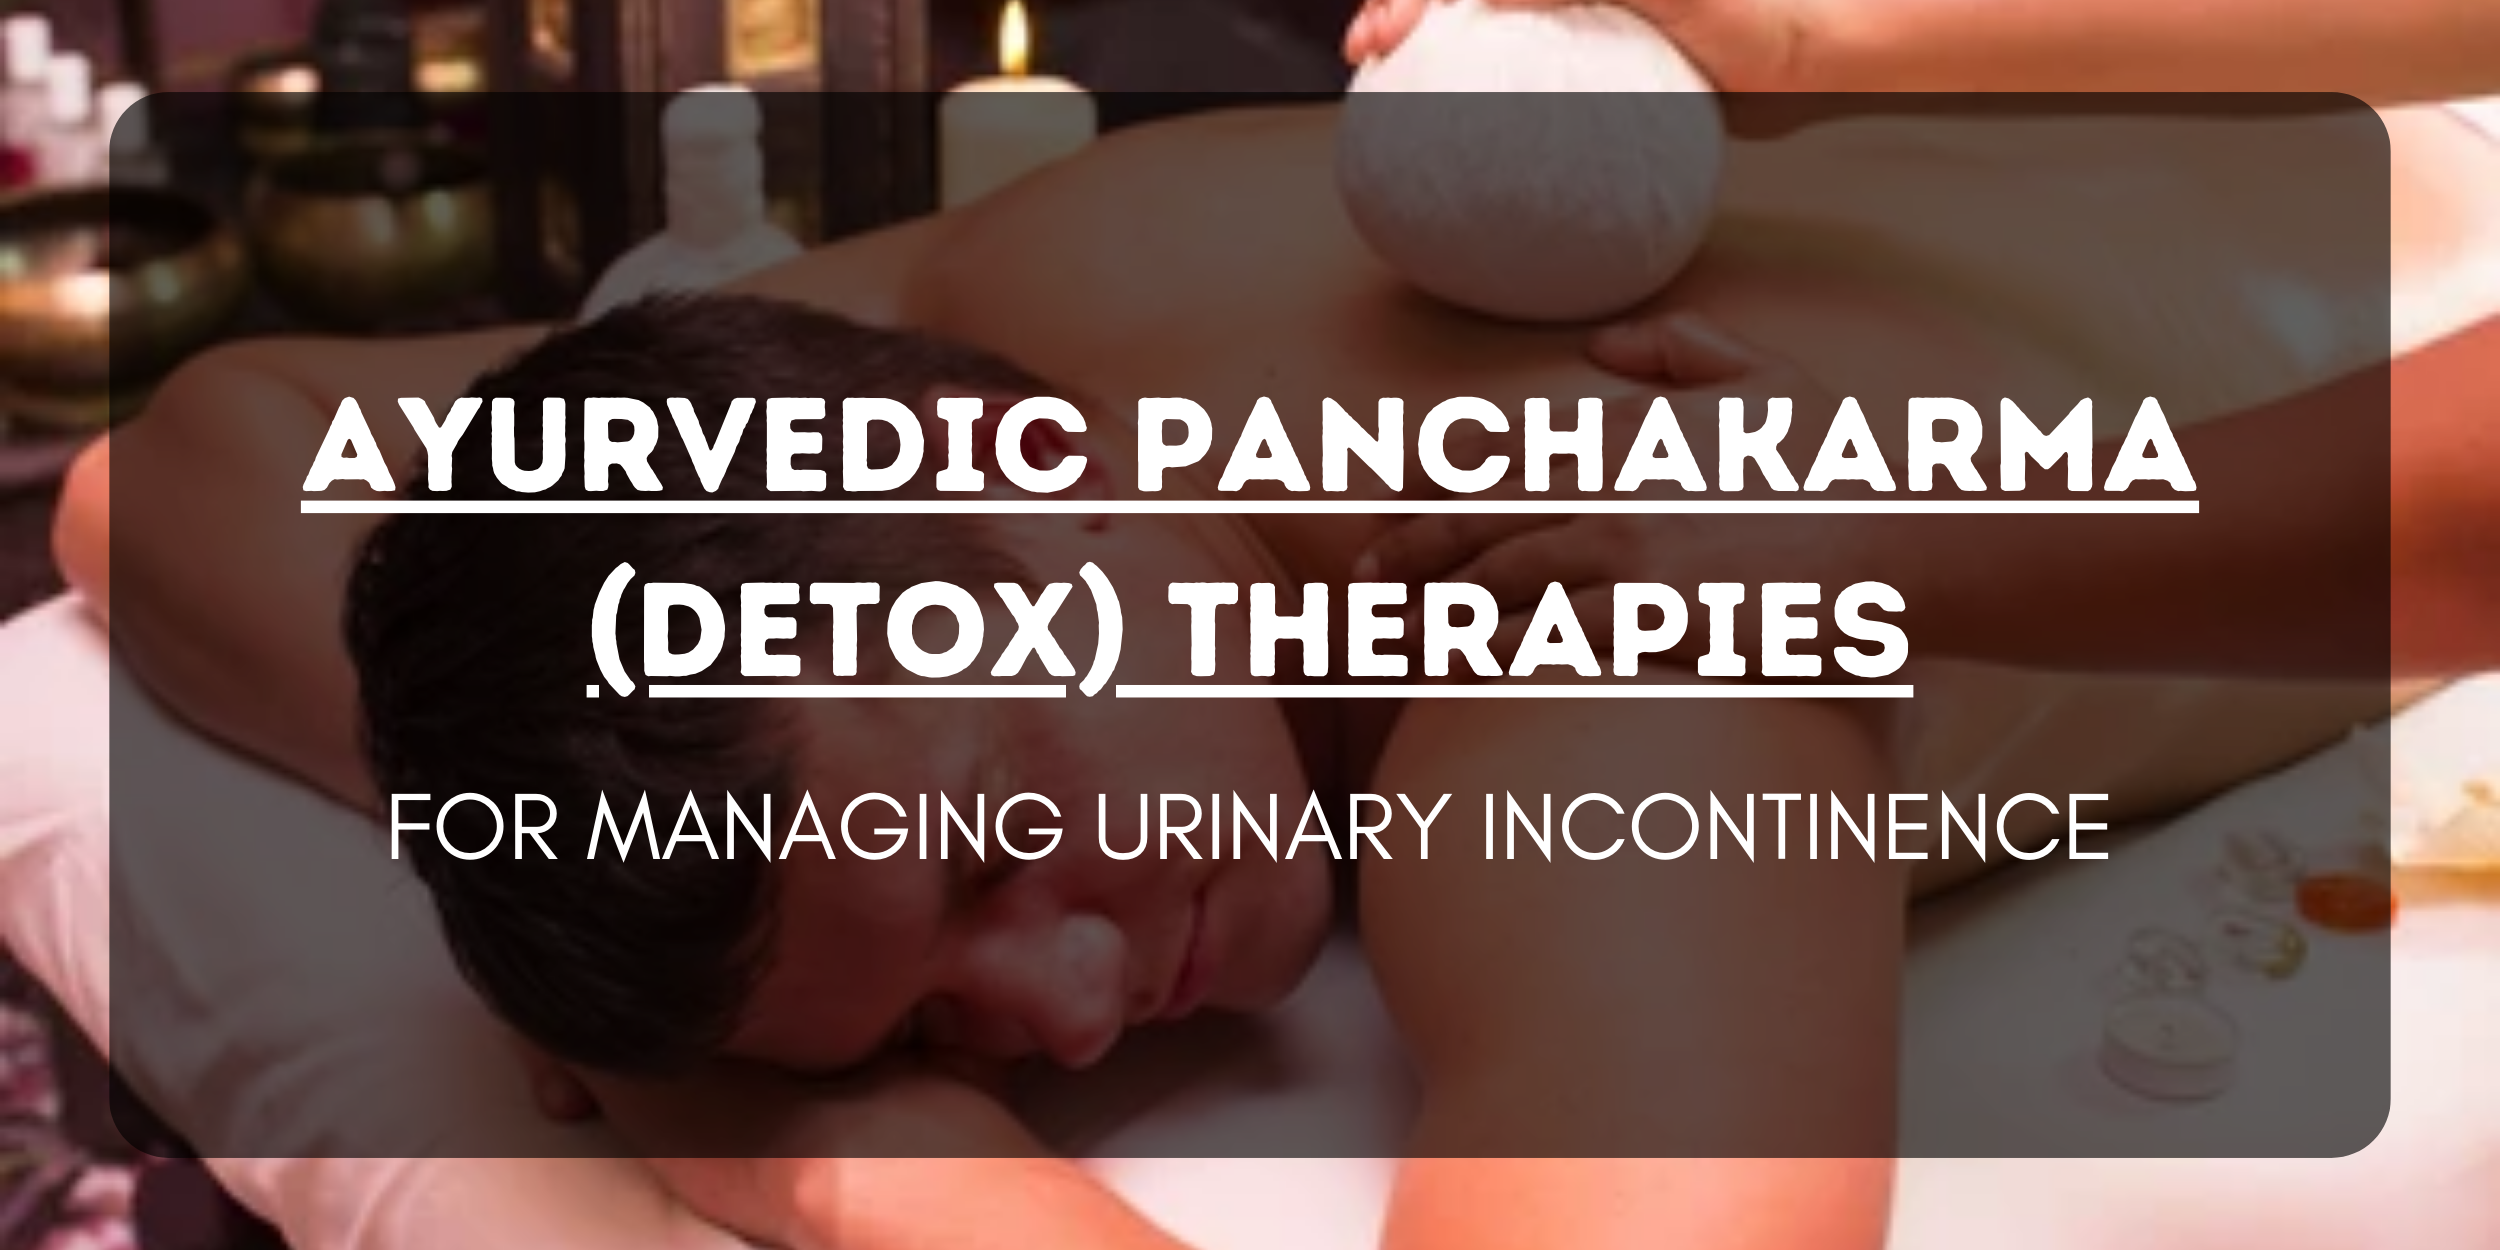 Ayurvedic Panchakarma (Detox) Therapies for Managing Urinary Incontinence